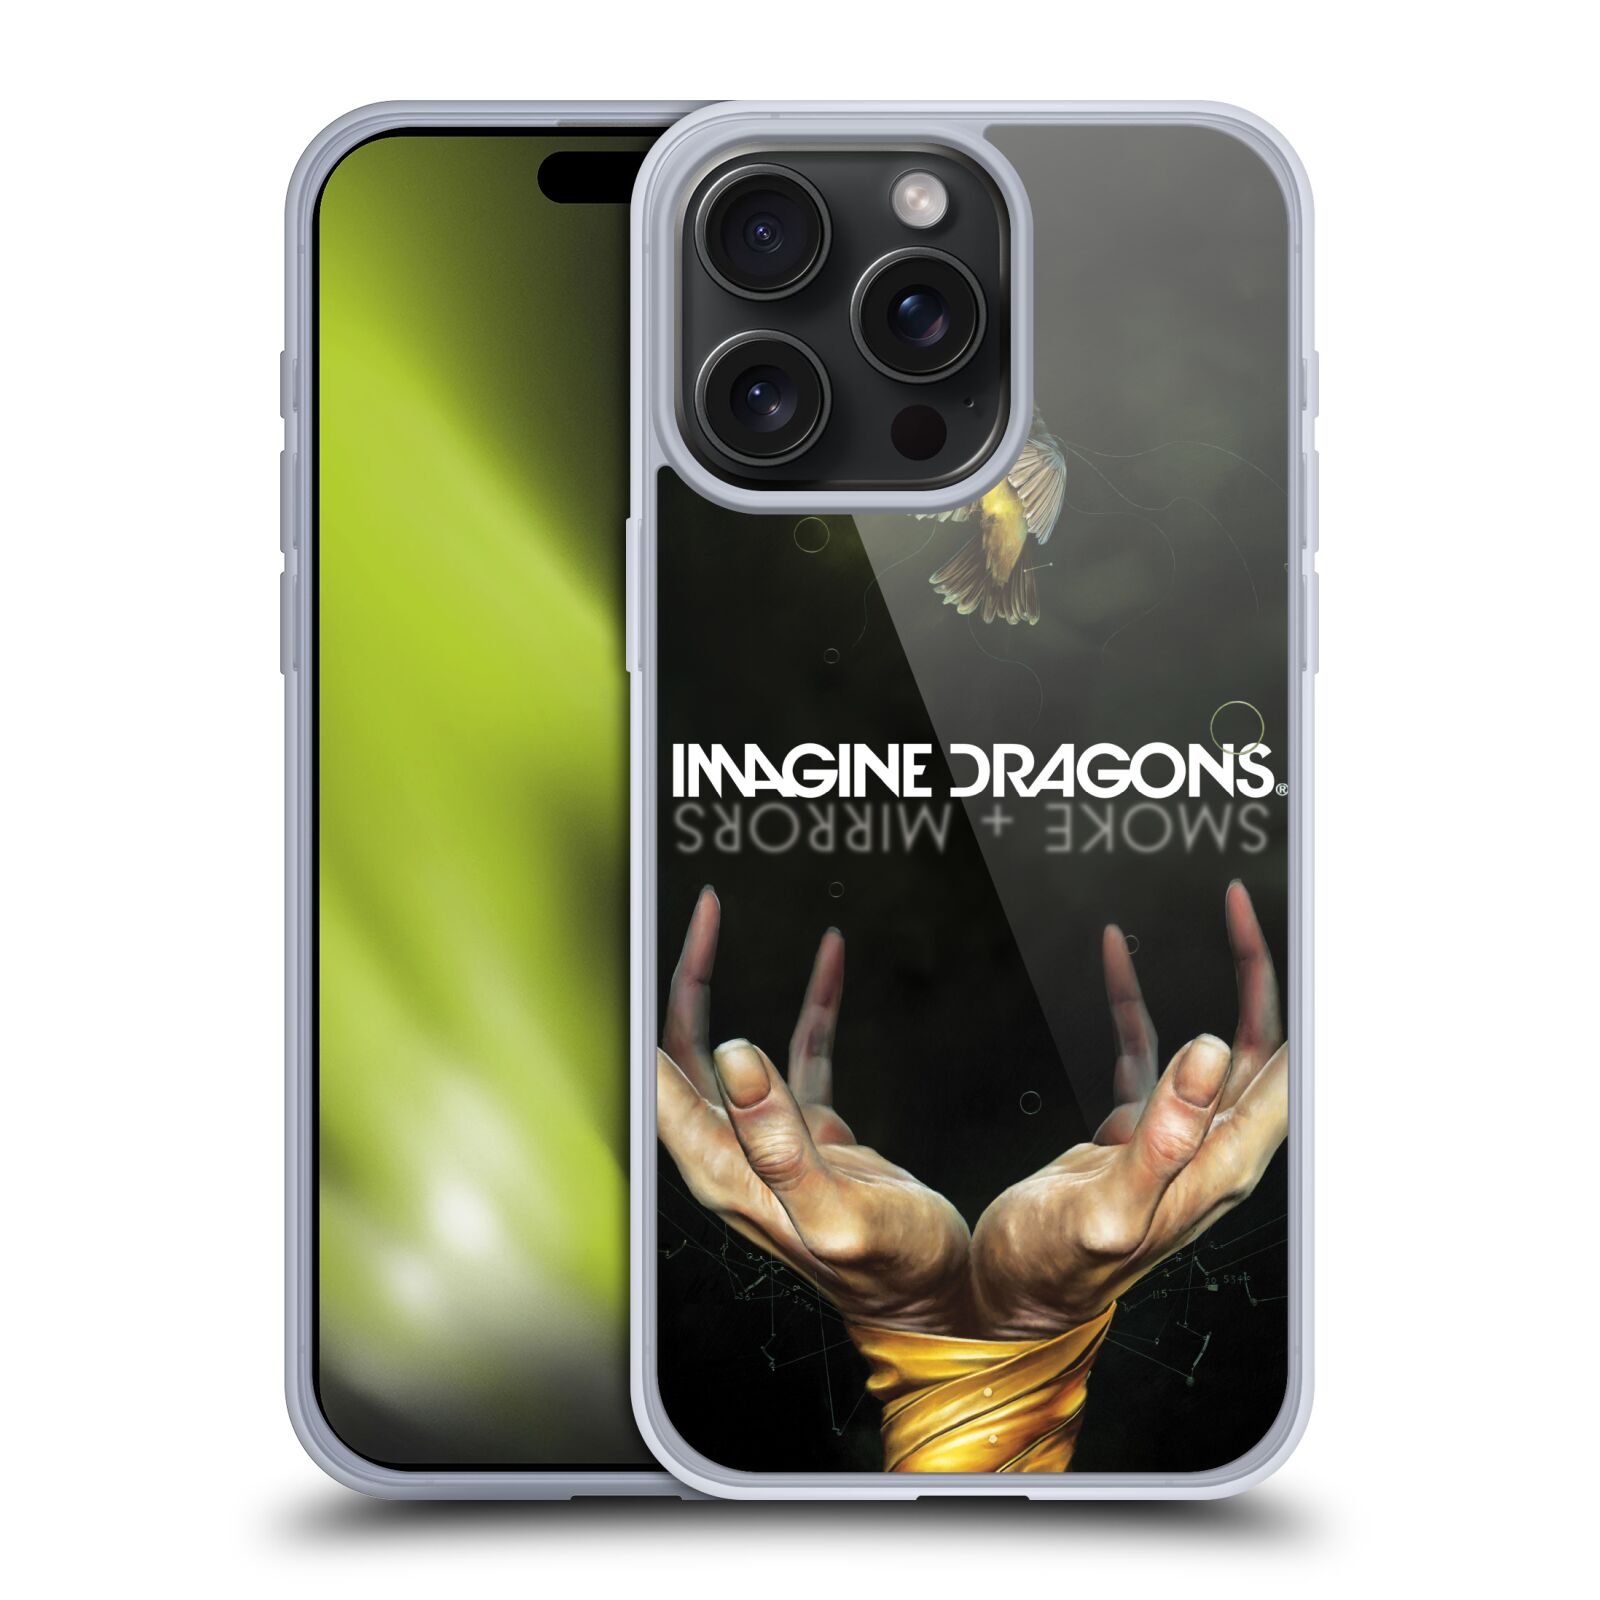 Silikonové lesklé pouzdro na mobil Apple iPhone 15 Pro Max - Imagine Dragons - Smoke And Mirrors (Silikonový lesklý kryt, obal, pouzdro na mobilní telefon Apple iPhone 15 Pro Max s licencovaným motivem Imagine Dragons - Smoke And Mirrors)